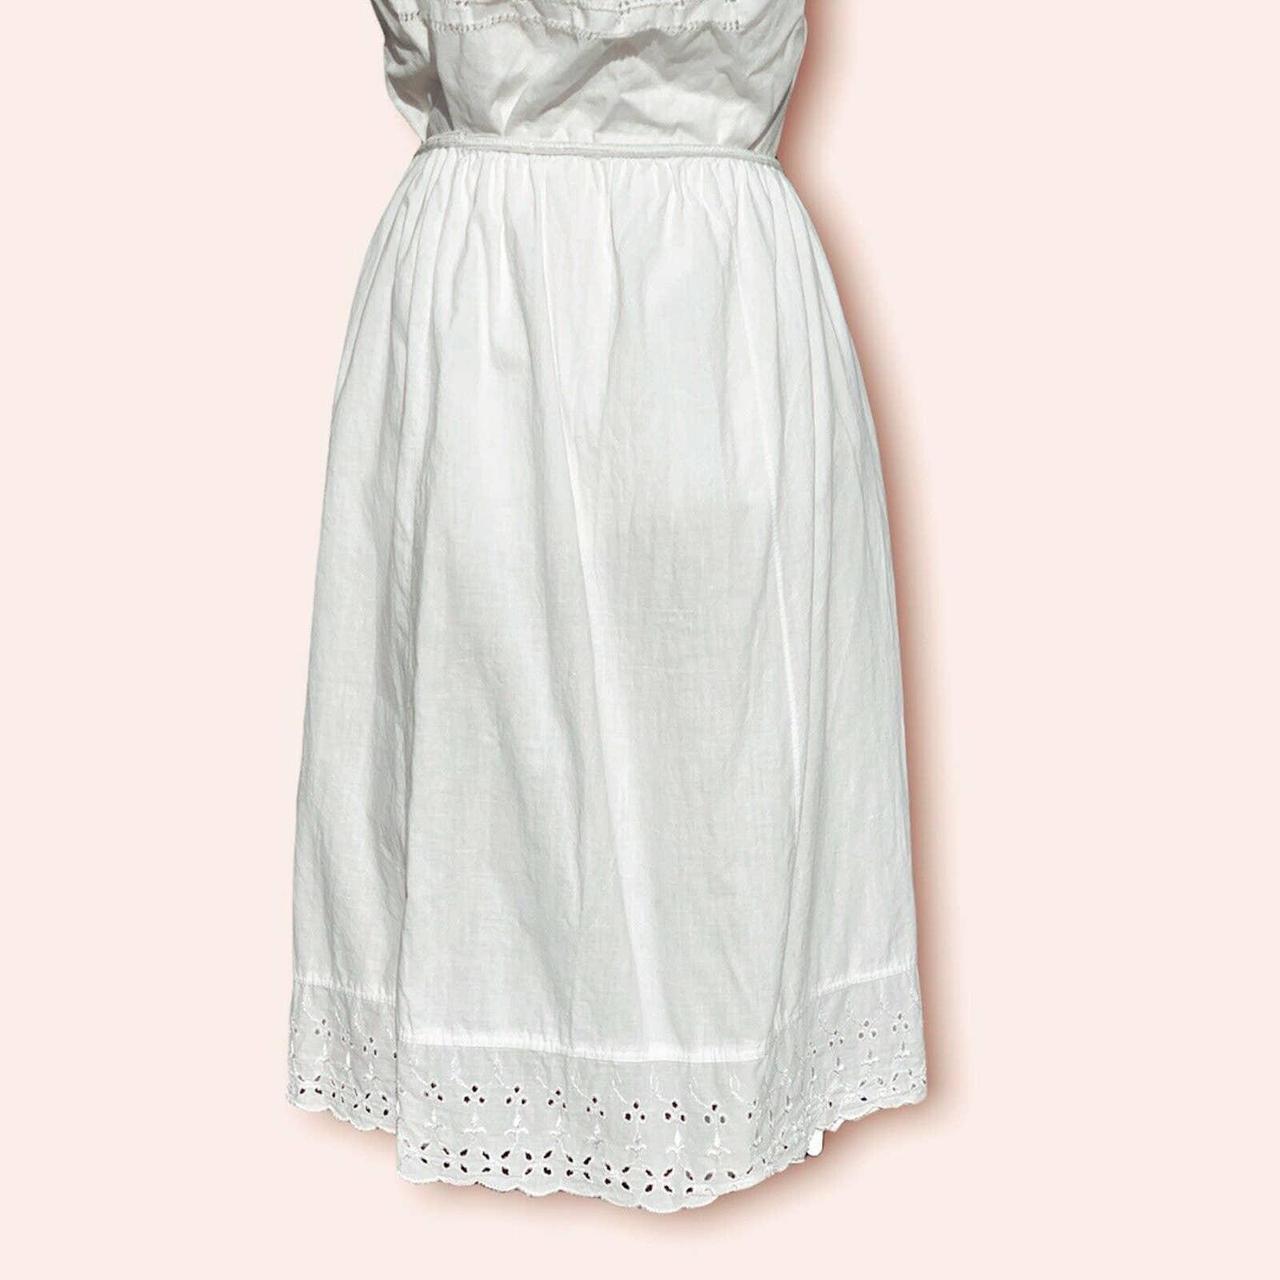 Product Image 3 - Vintage Eyelet Slip Skirt White